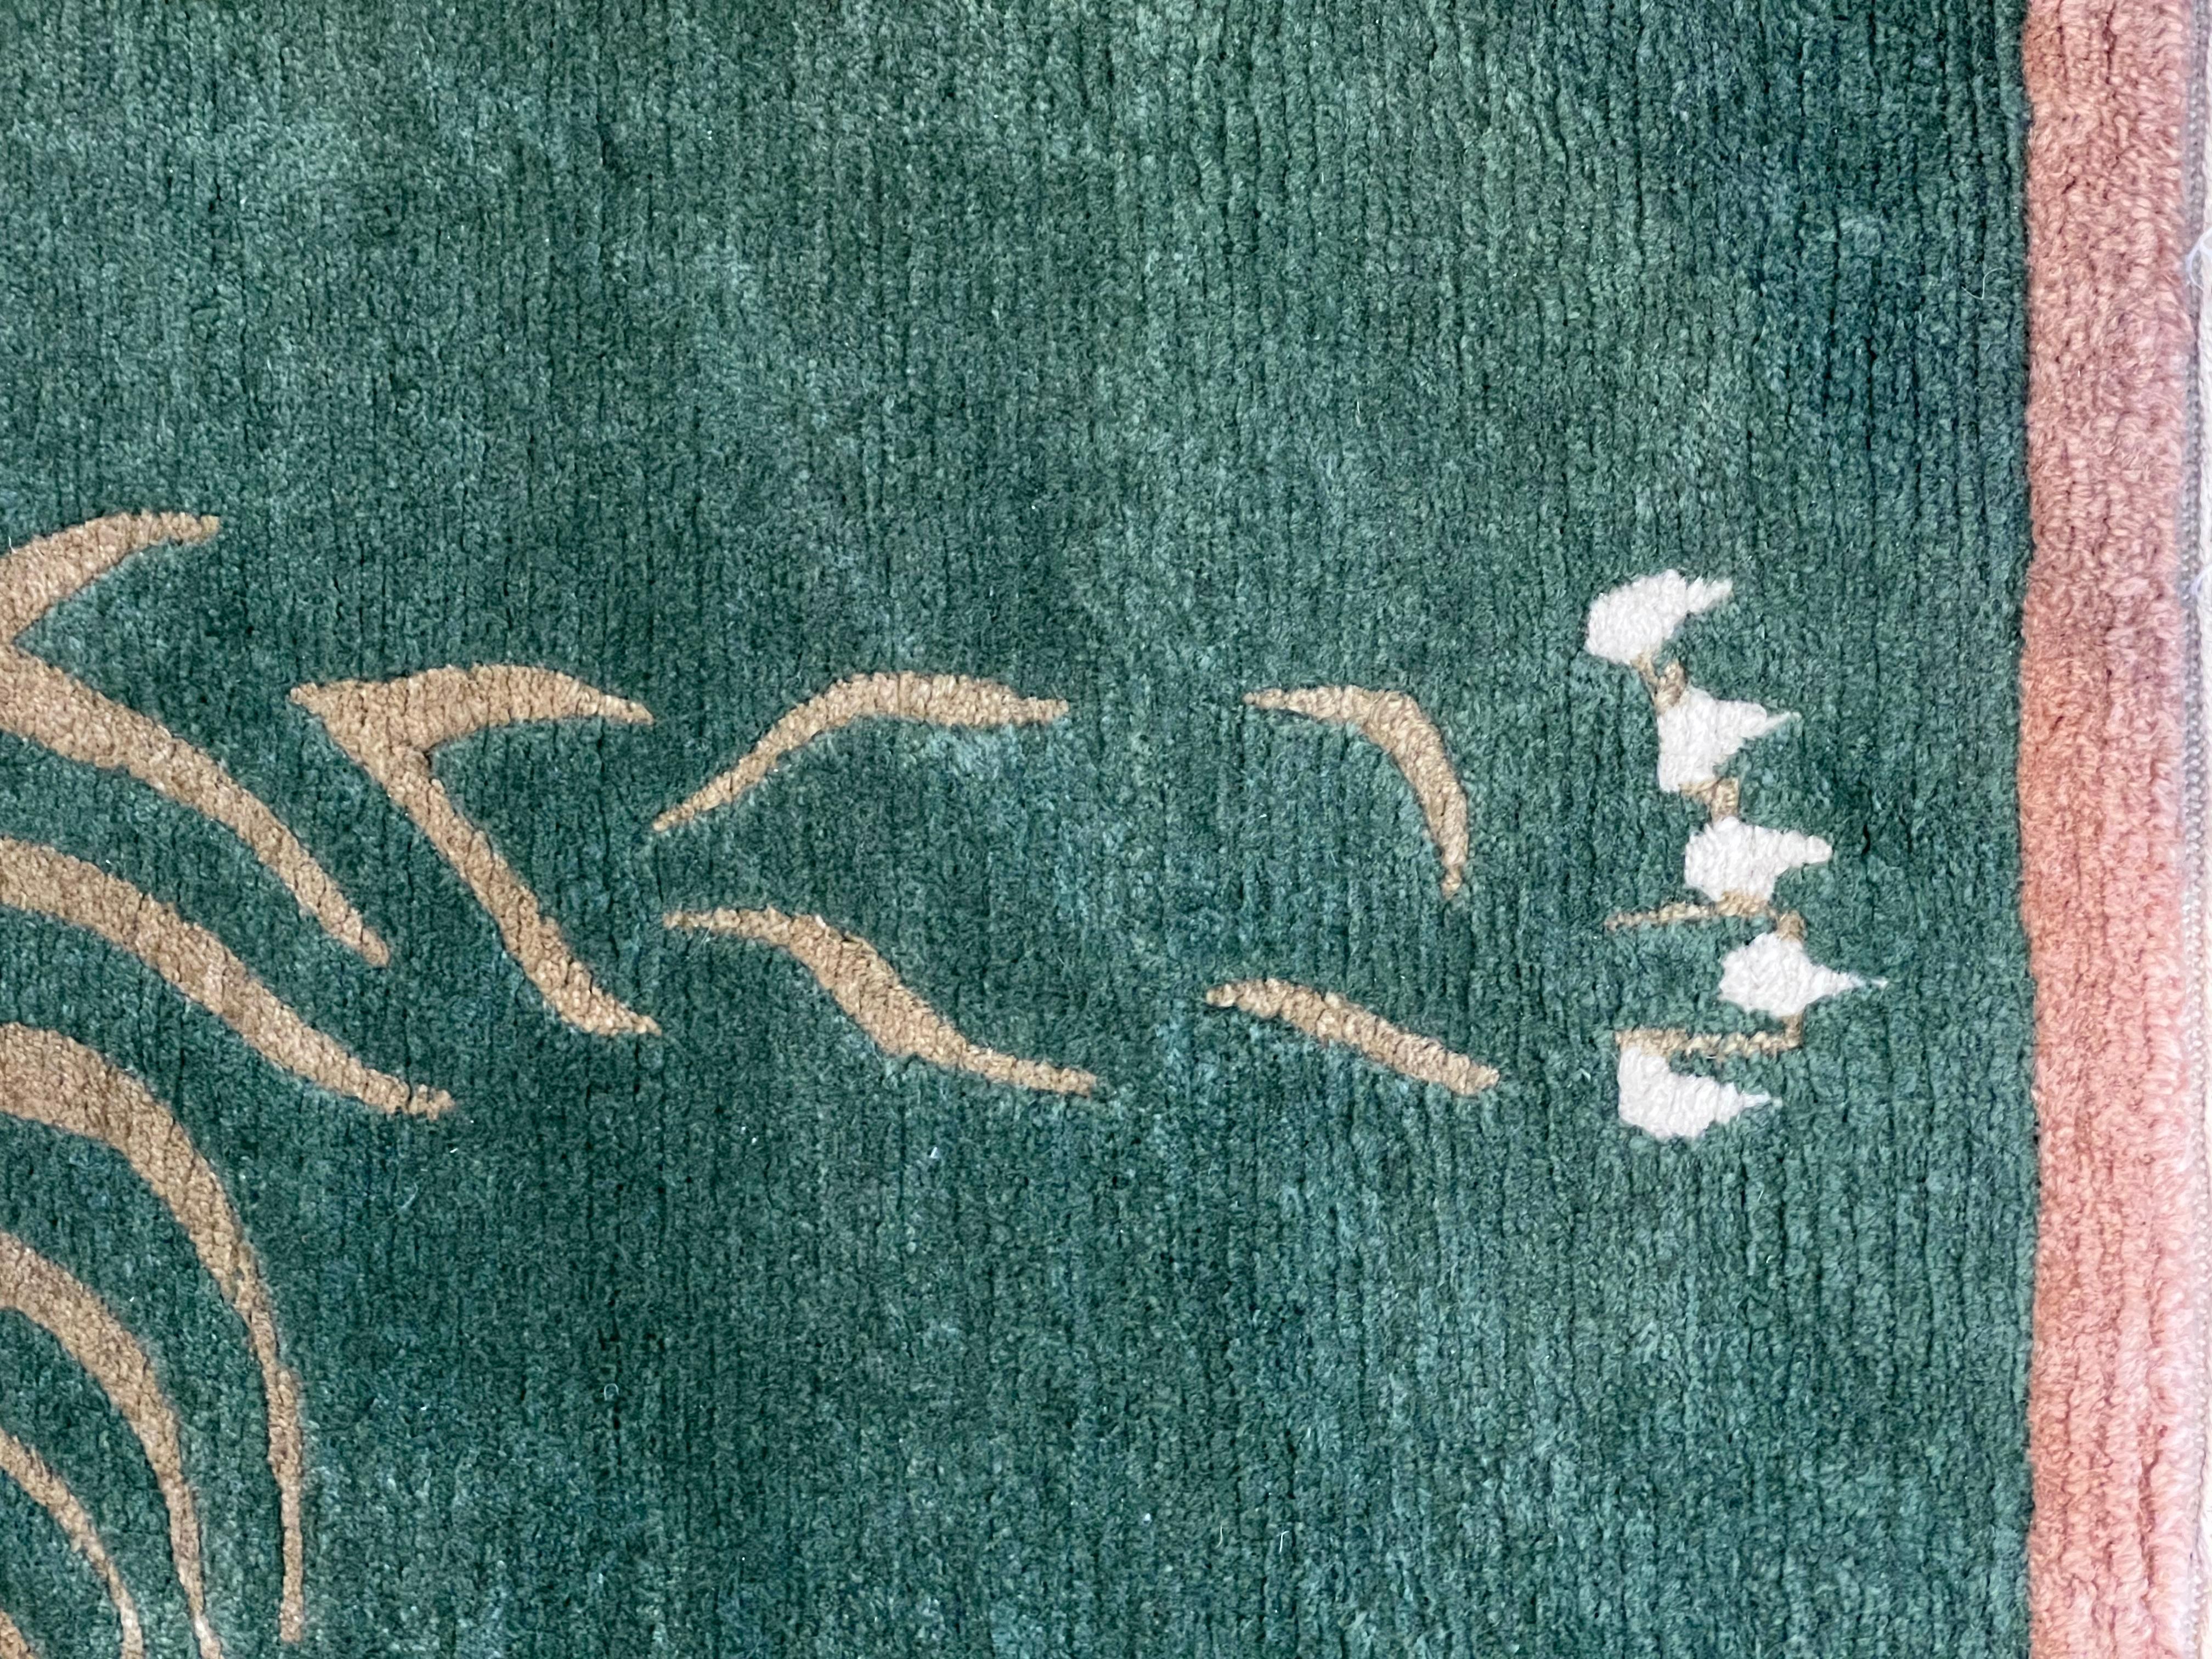 Nepalese Tiger Carpet Background Green Grass